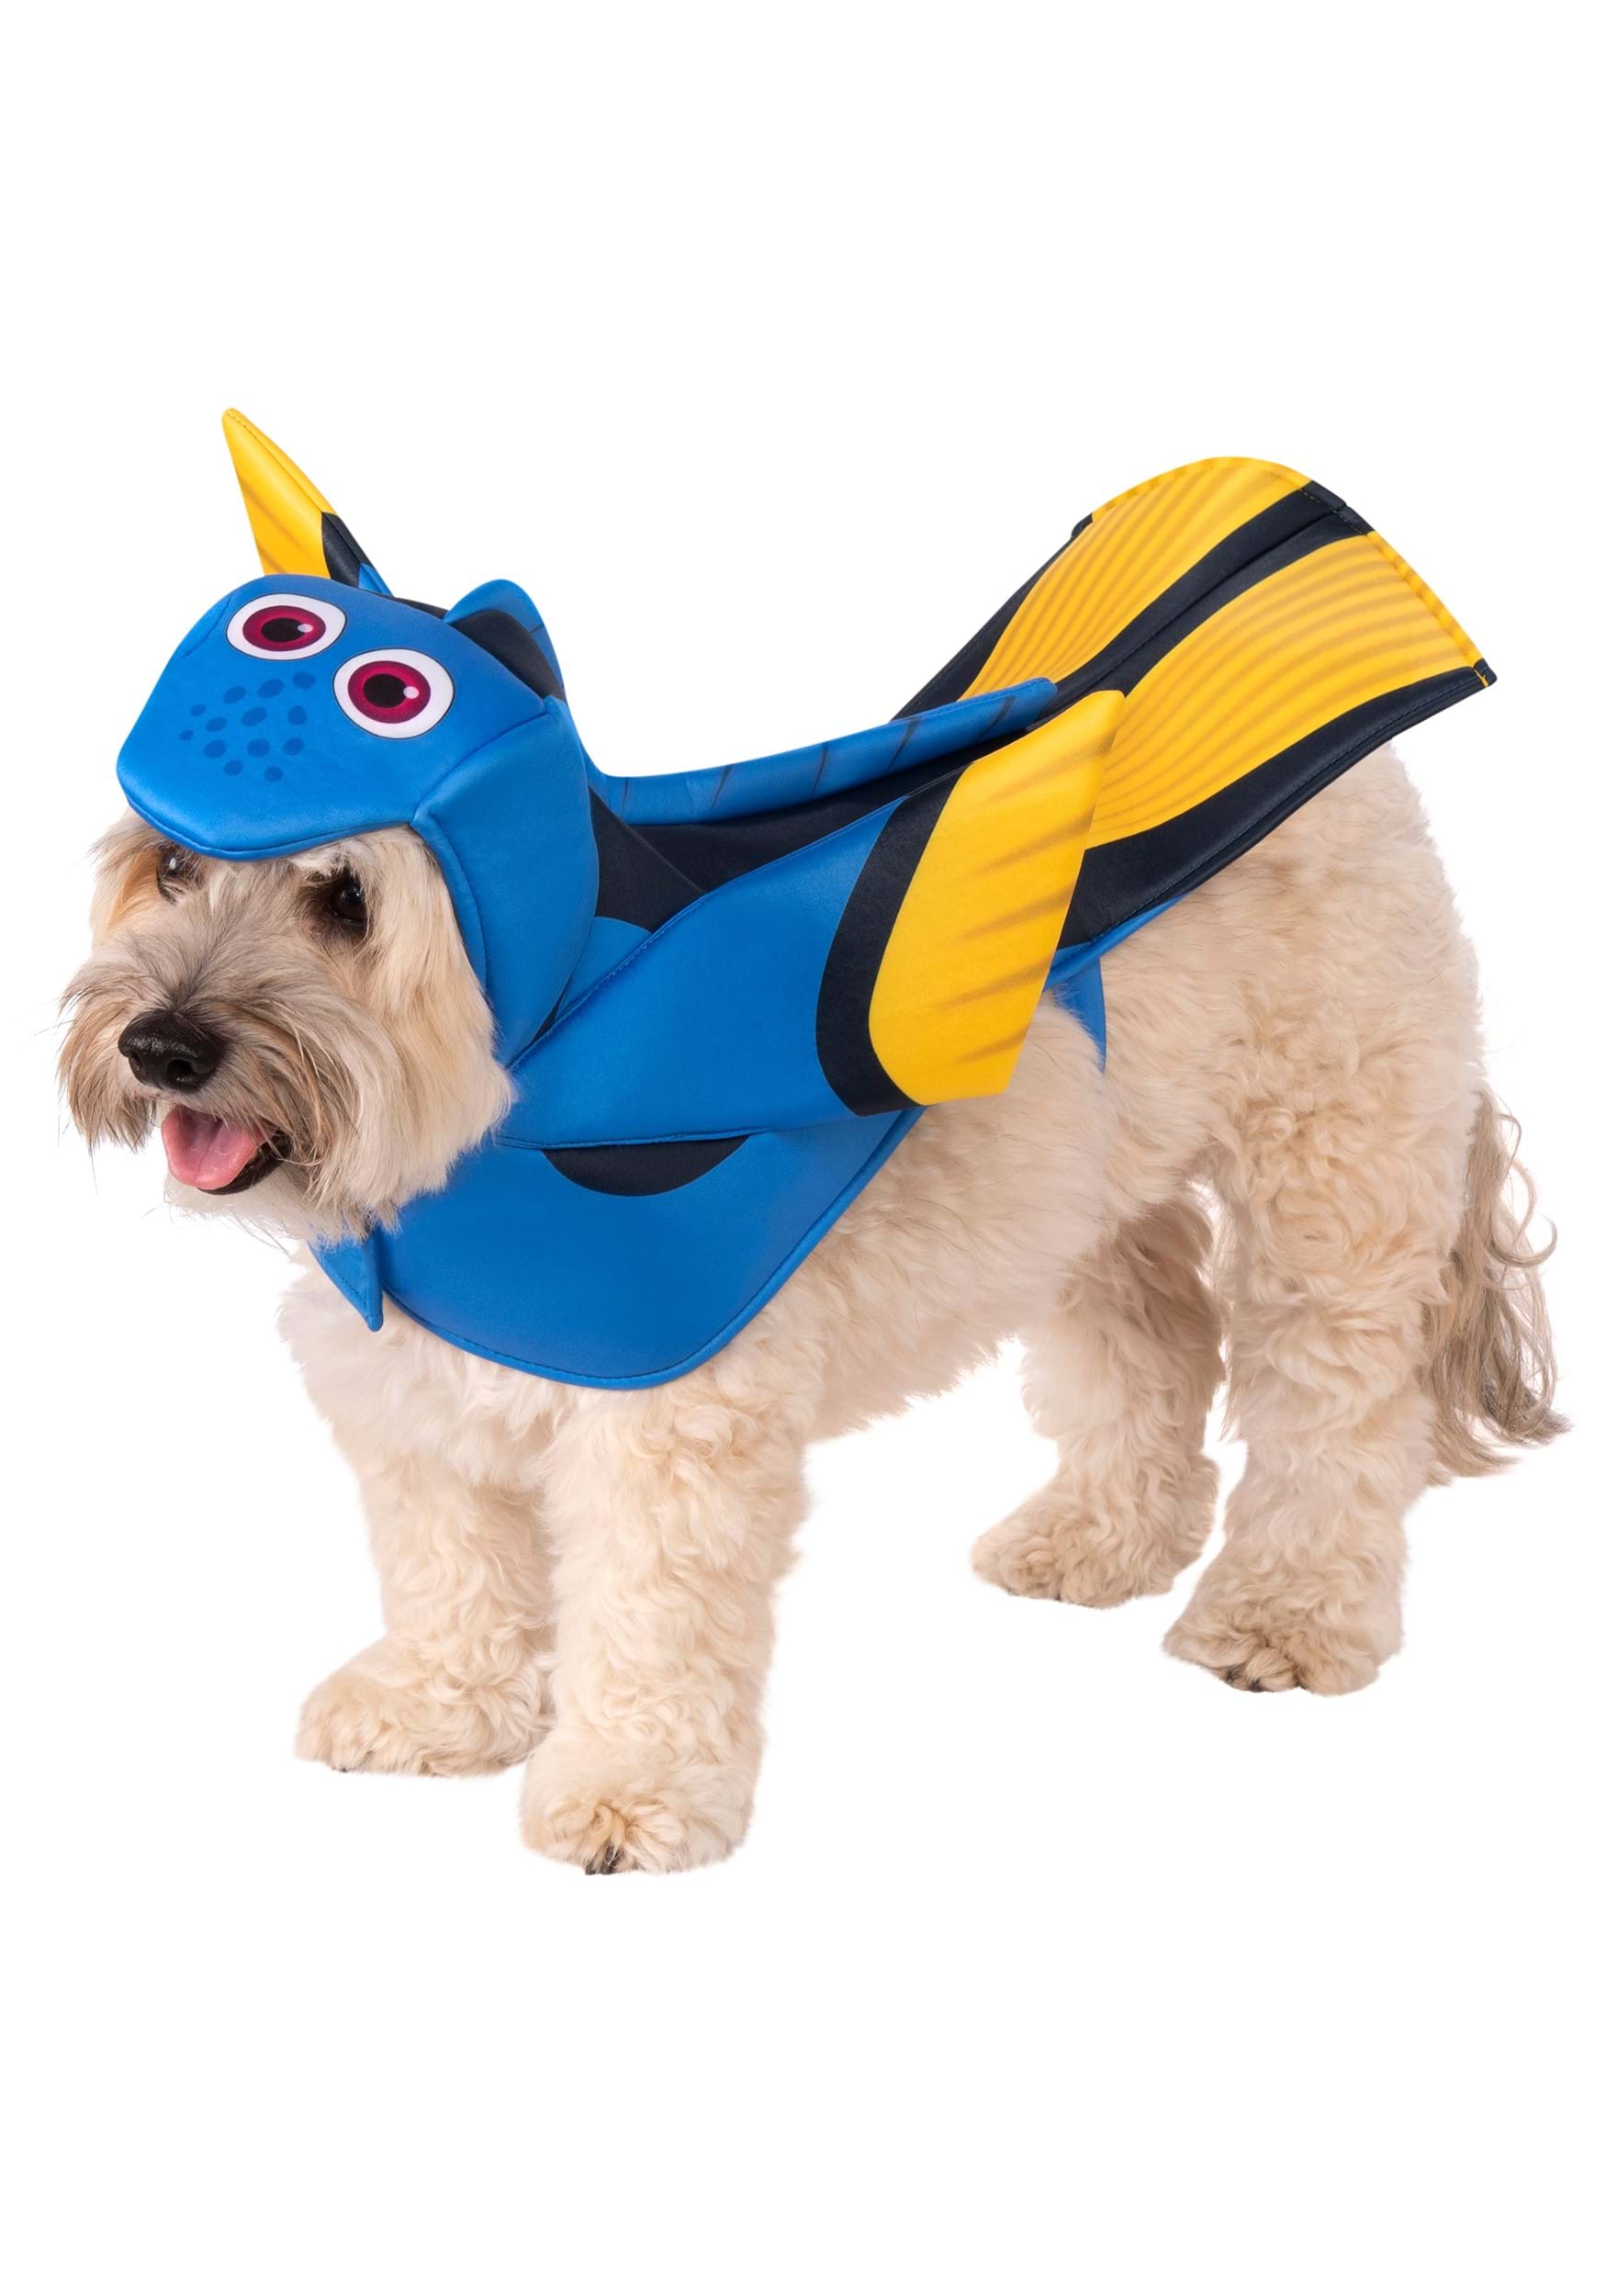 Finding Nemo Dory Dog Costume